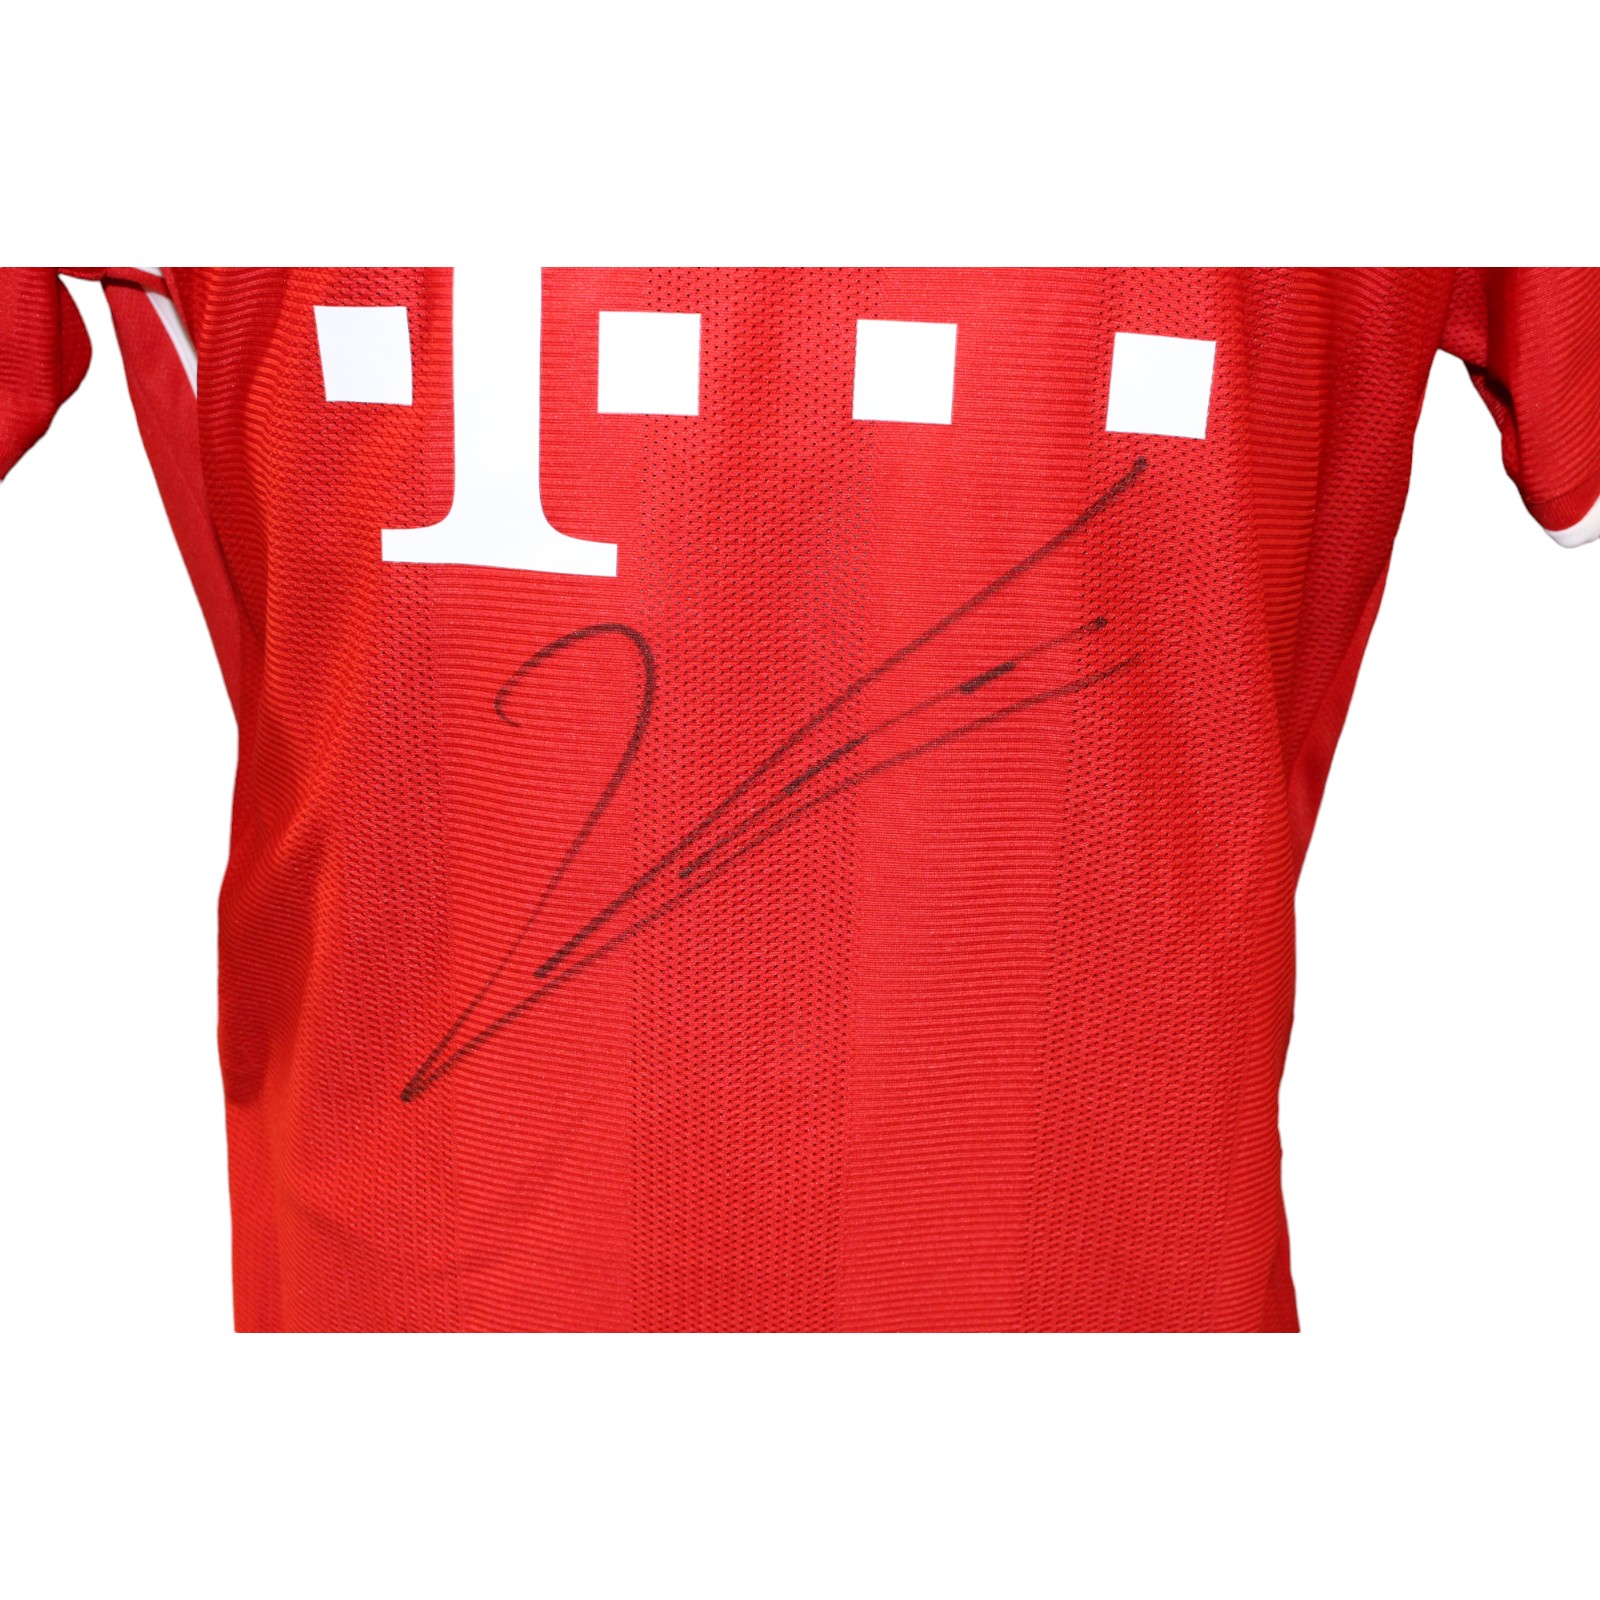 Robert Lewandowski Signed Bayern Munich Adidas Red Jersey Beckett